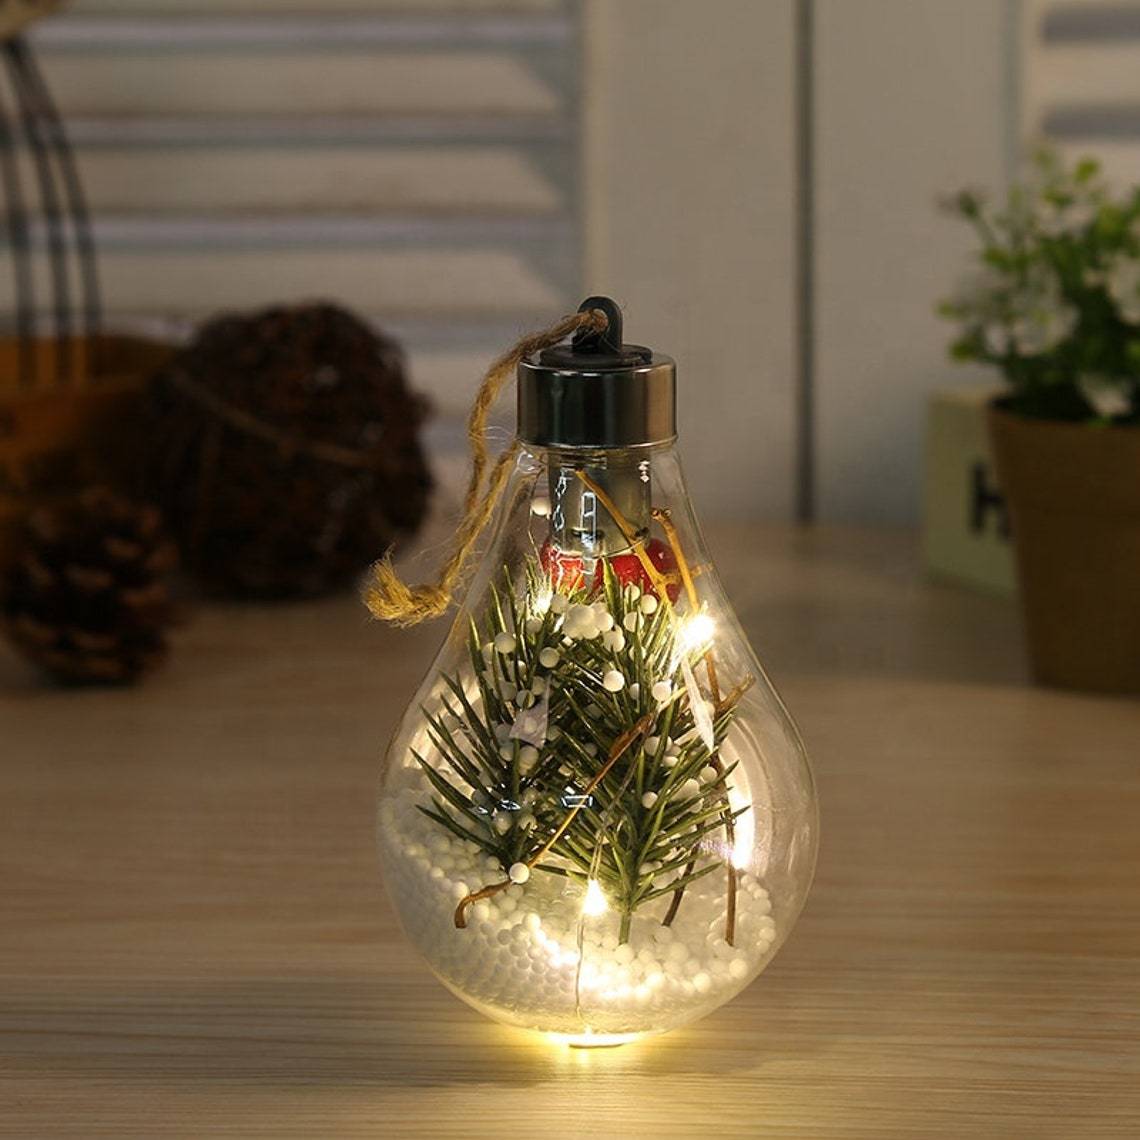 Spectacular light bulb ornament (from Etsy)